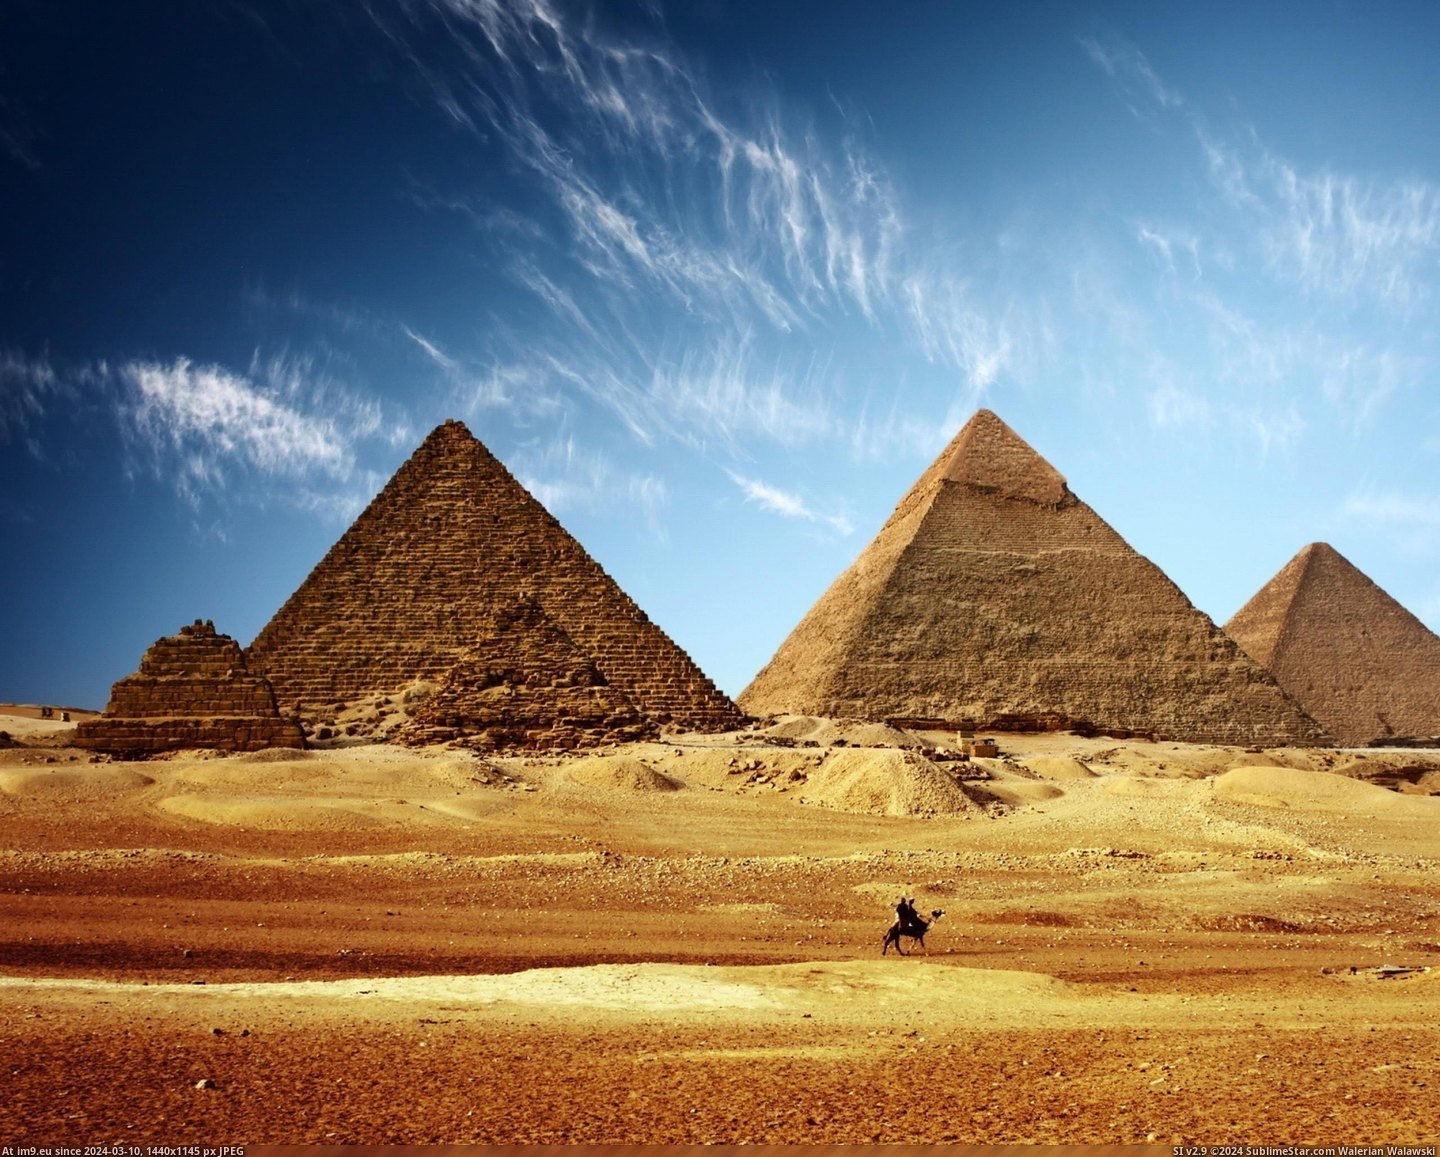 #Wallpaper #Beautiful #Blue #Sand #Pyramid #Egypt #2560x2048 #Wide #Golden #Sky Egypt - pyramid, golden sand and blue sky (Wallpaper 2560x2048) Pic. (Image of album Rehost))